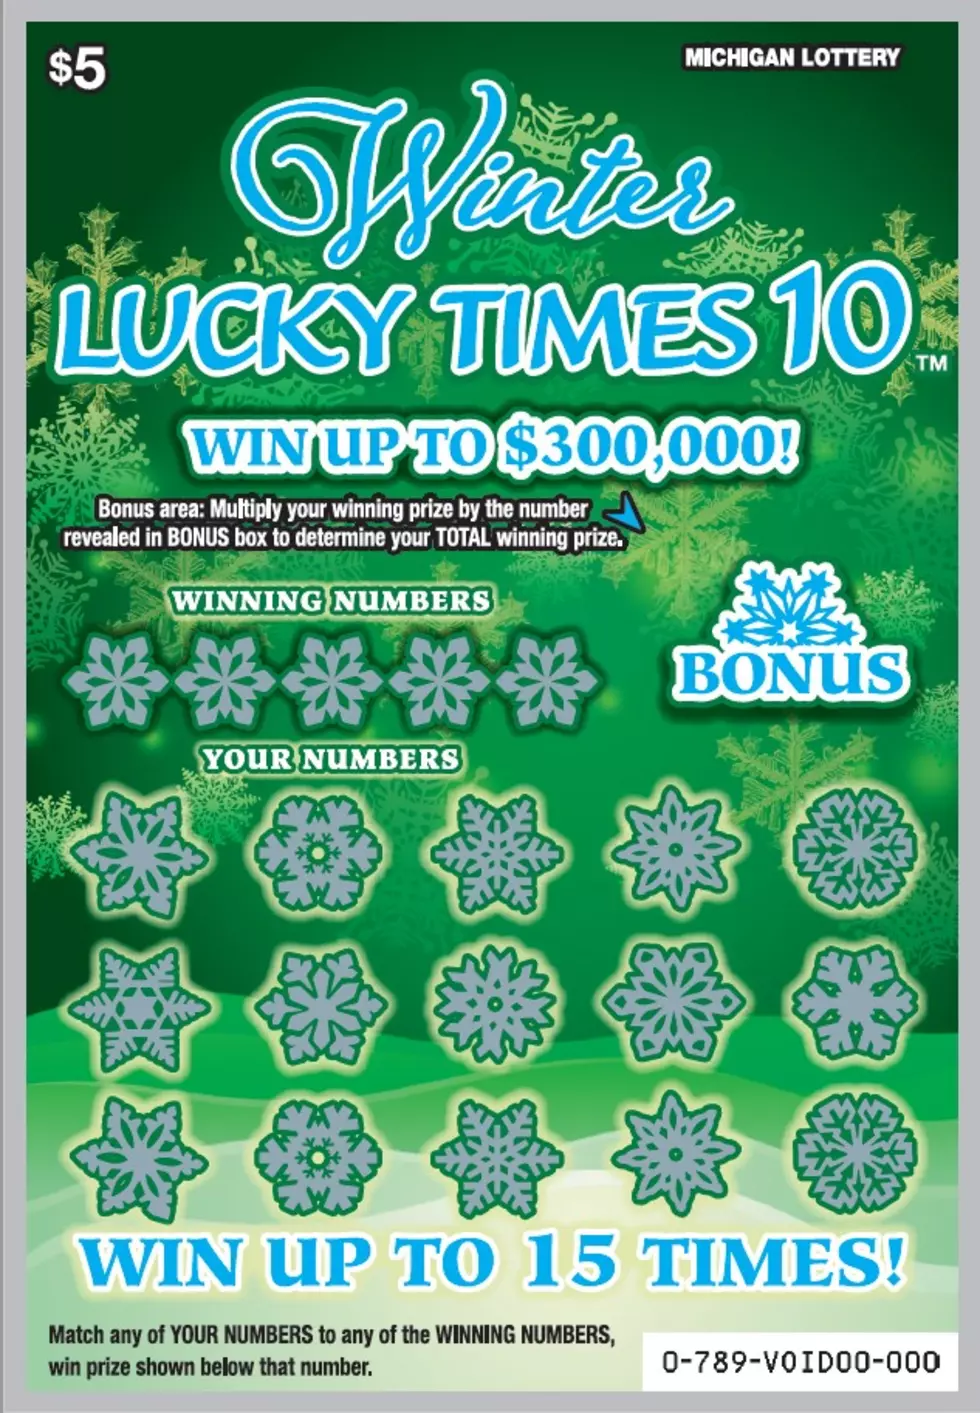 Massive Million Mondays Return with Michigan Lottery’s Winter Lucky Times 10